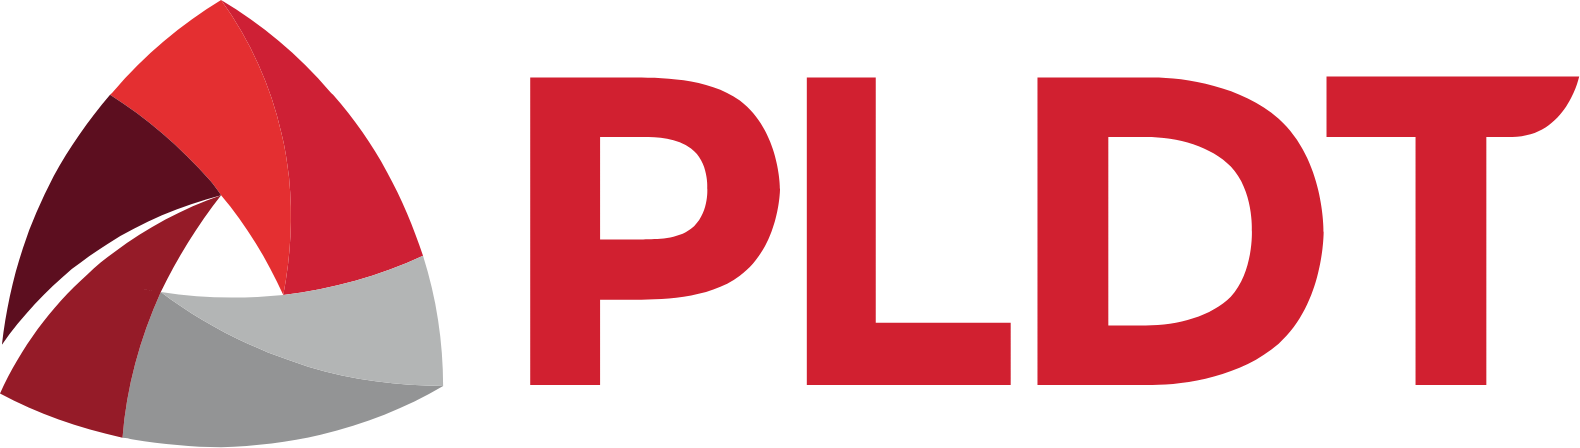 PLDT it companies in Philippines